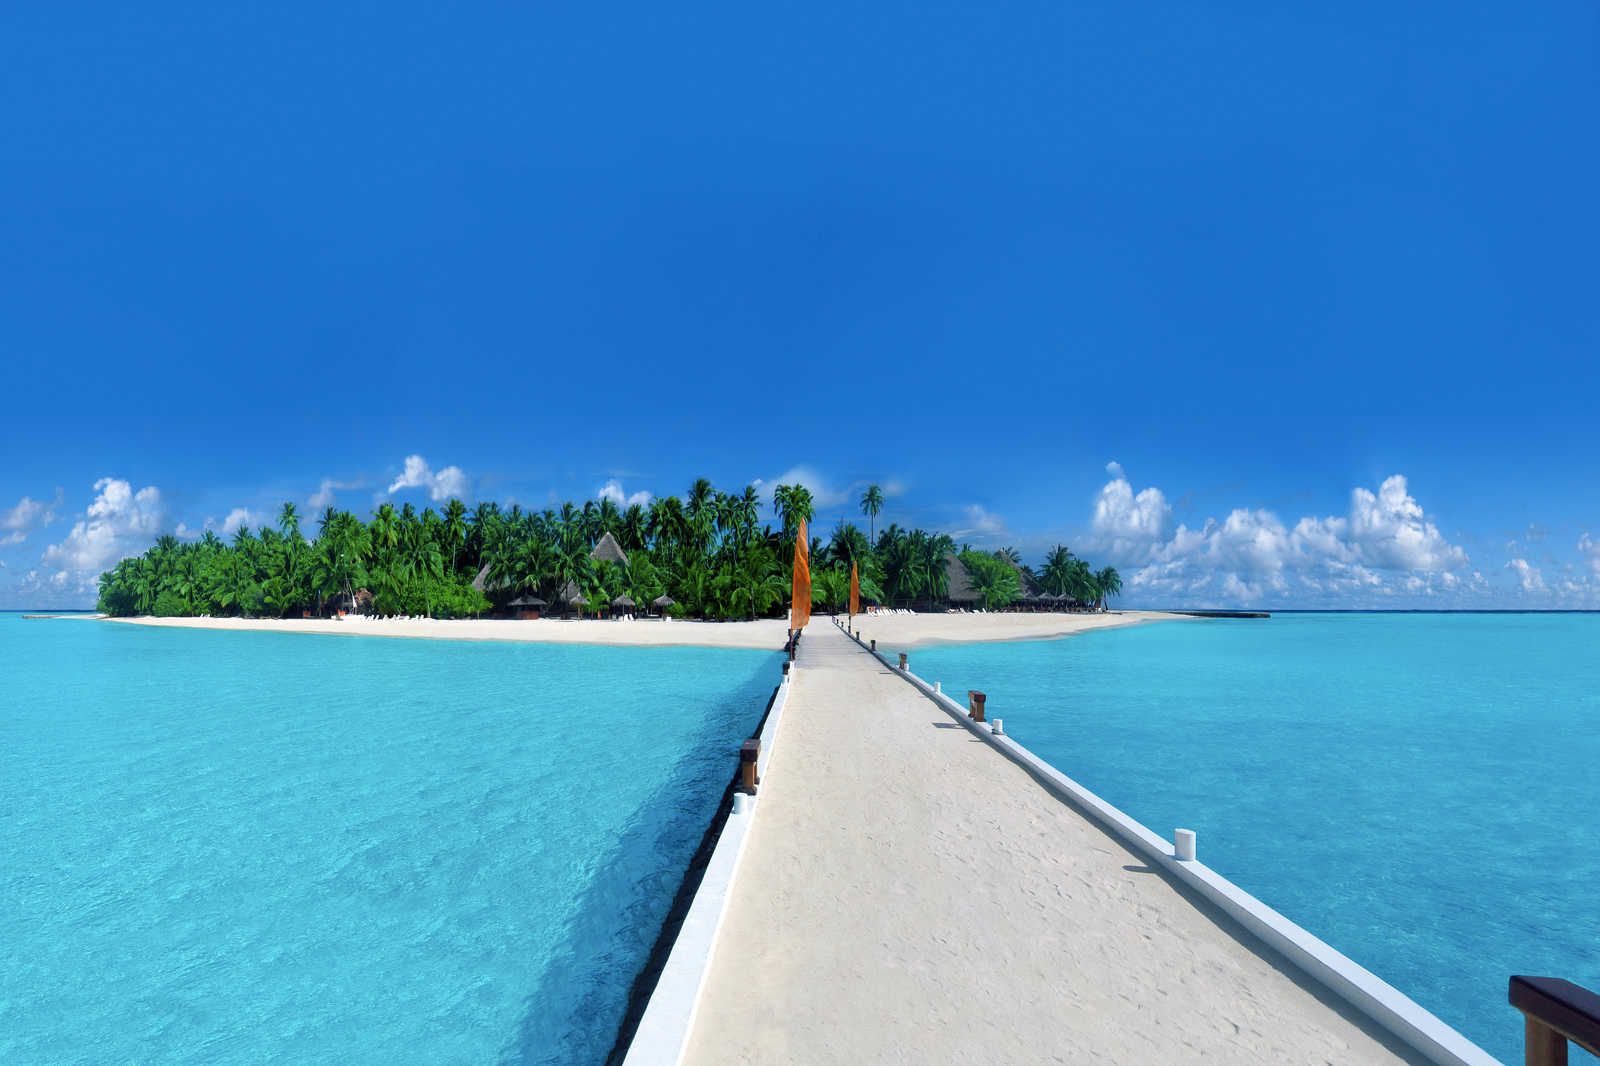             Leinwandbild Insel mit Steg zum Strand – 0,90 m x 0,60 m
        